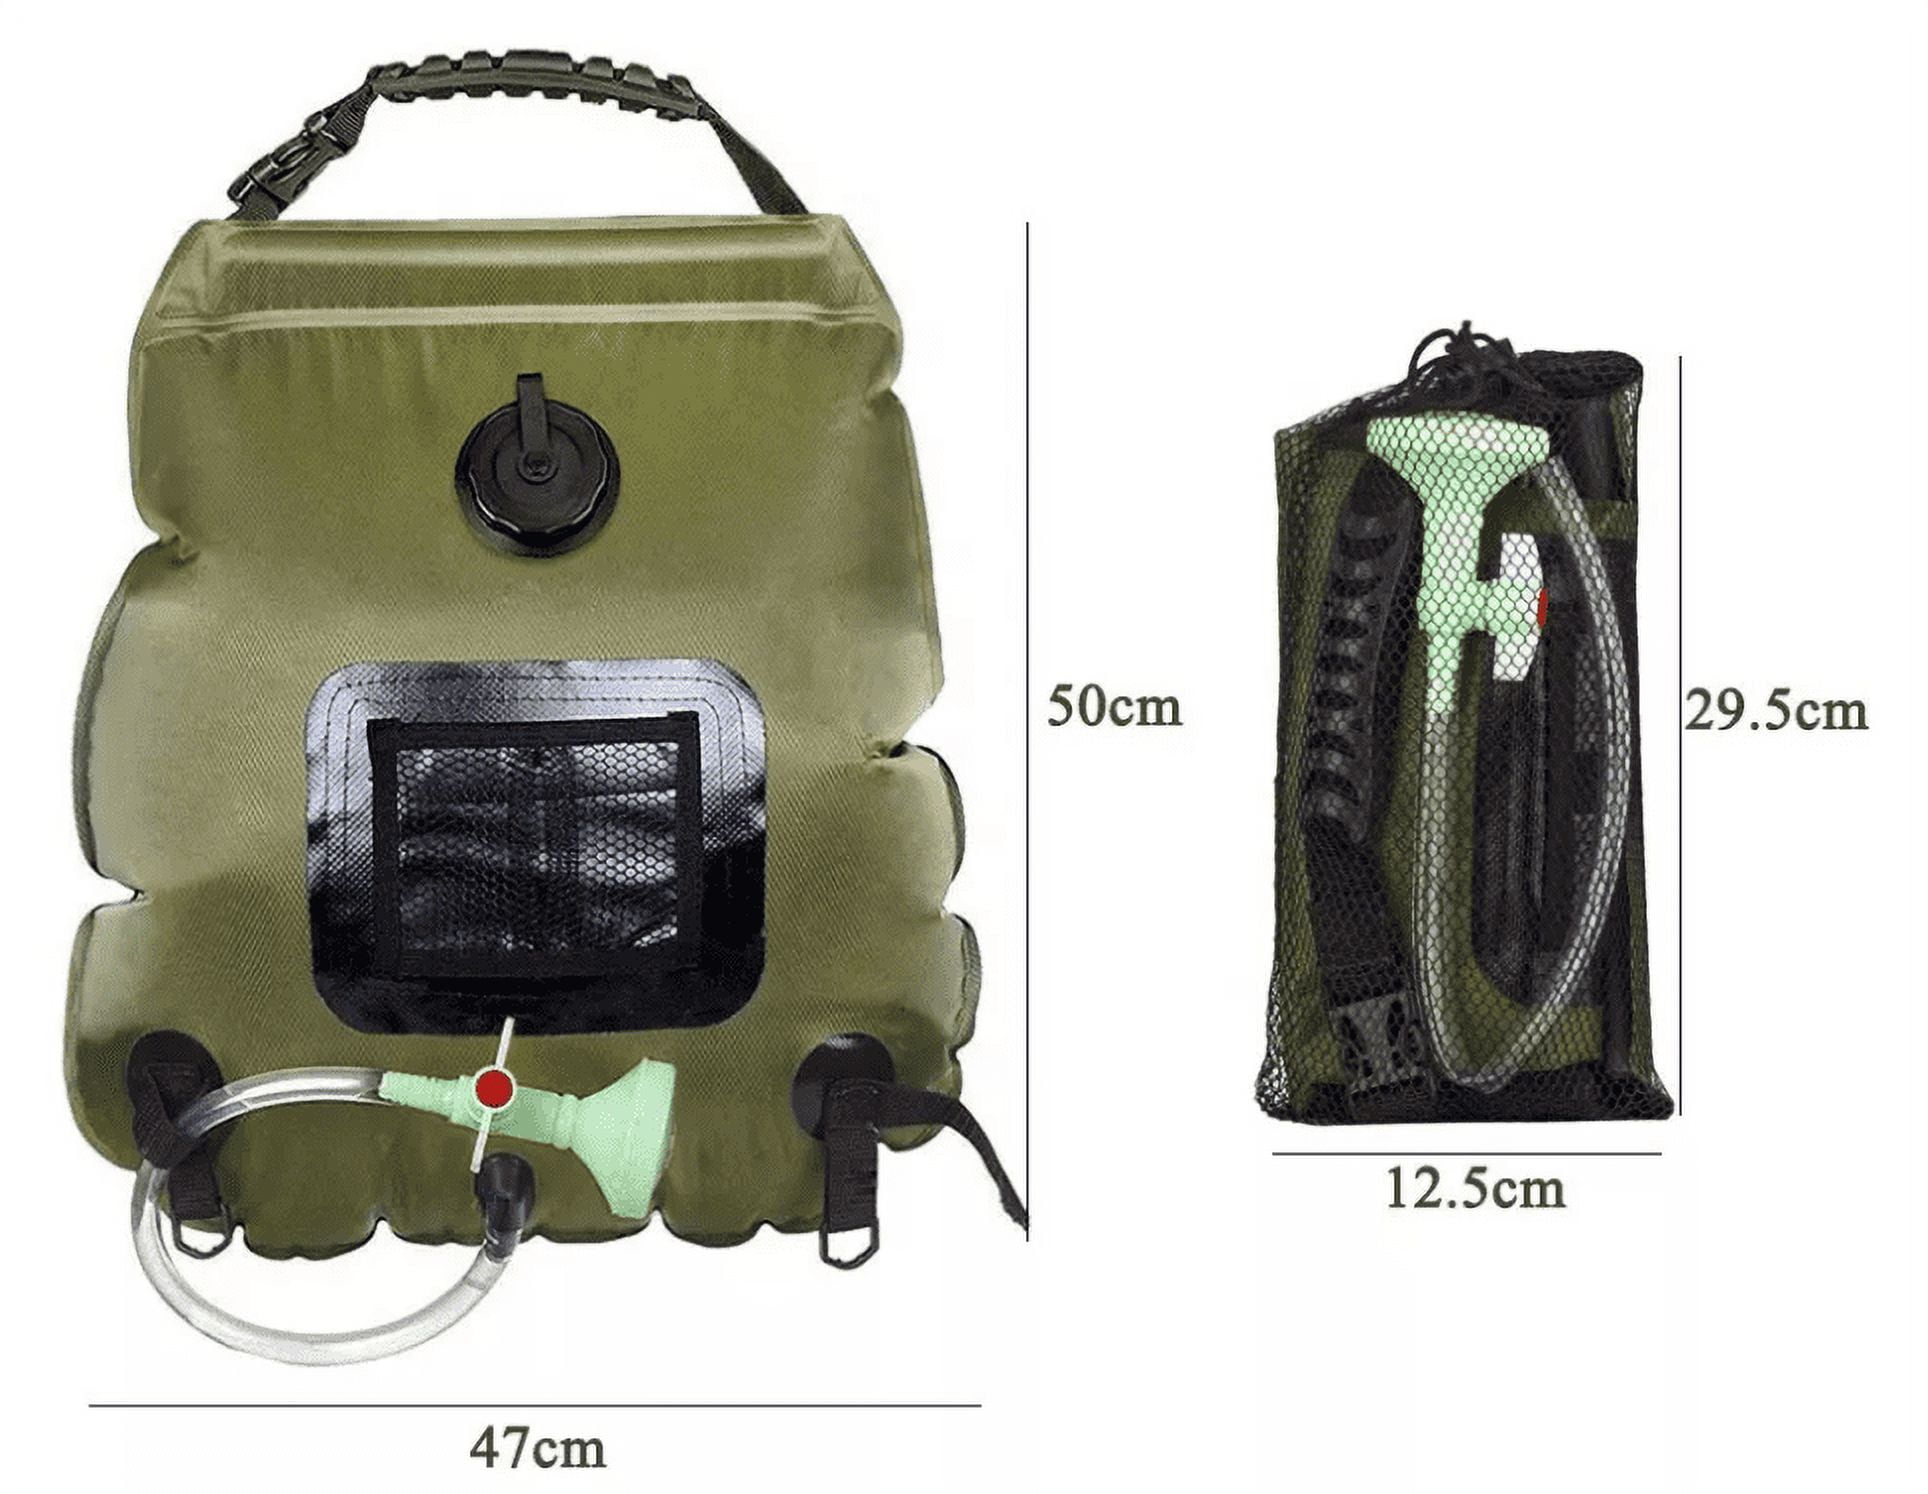 RadBizz Portable Outdoor Camping Shower - 5 Gallon/20 Liter Camp